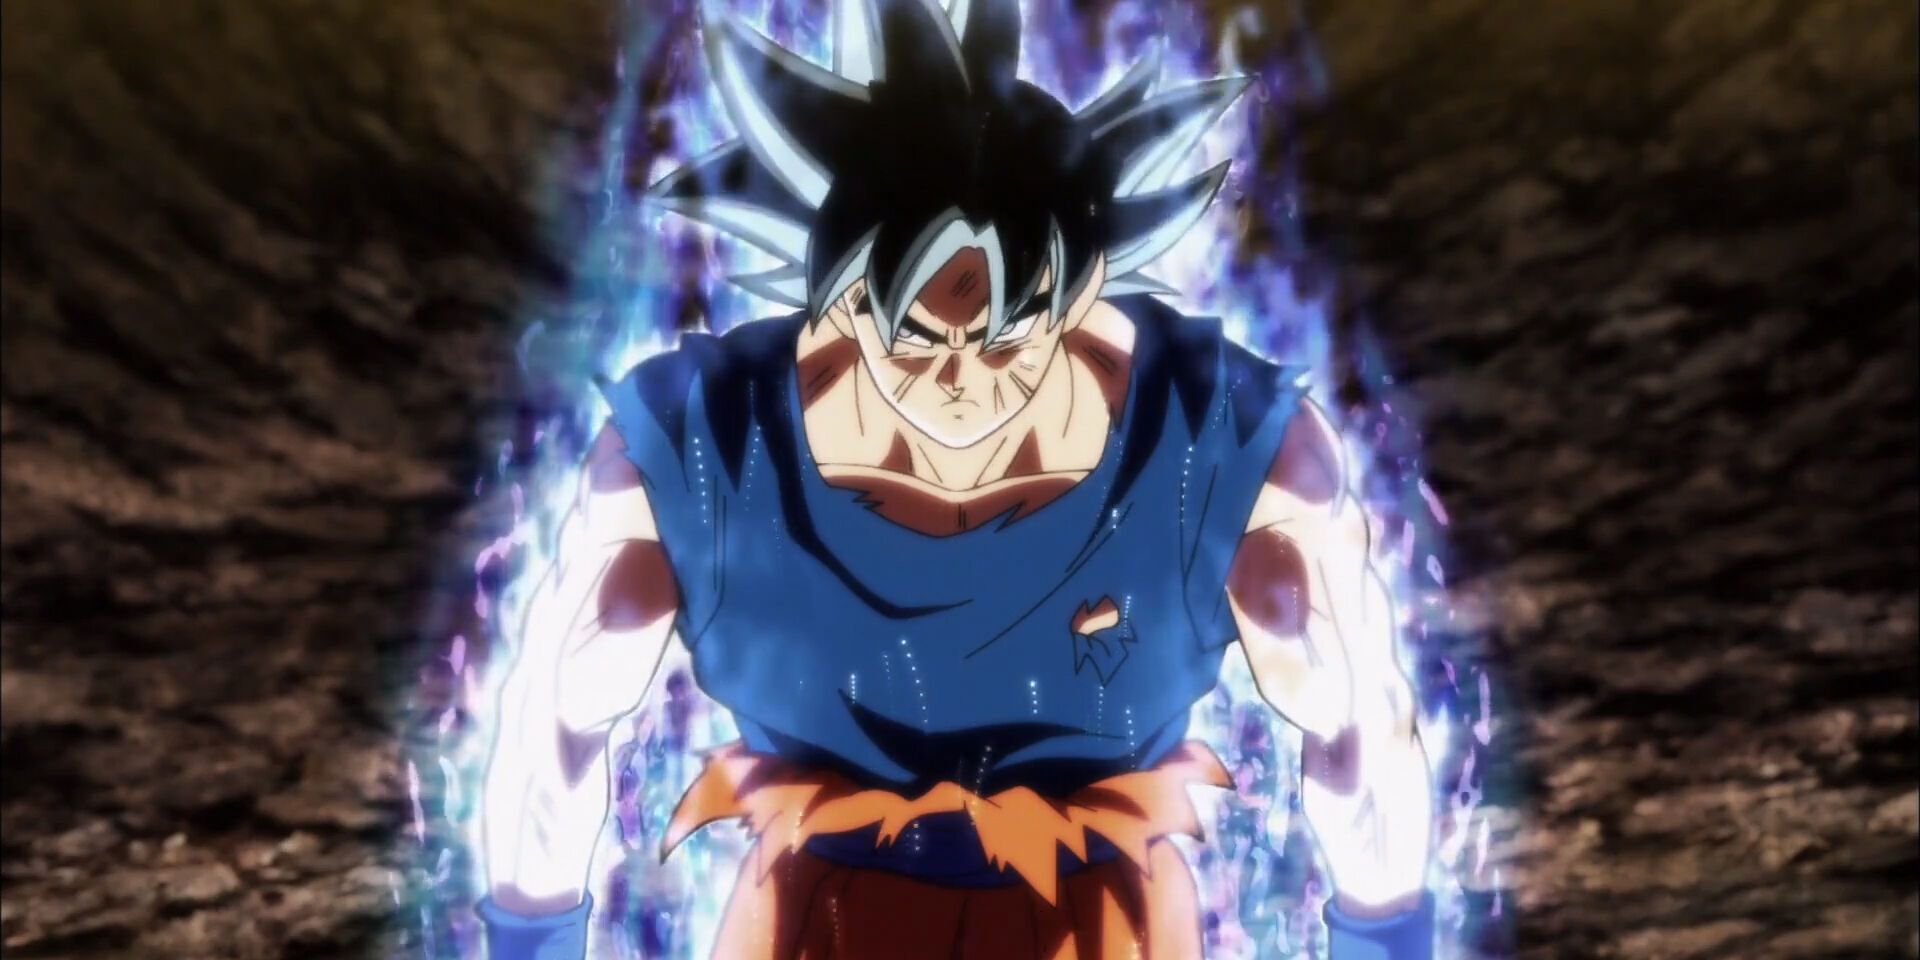 Ultra Instinct Sign Goku fights Universe 11 in Dragon Ball Super.